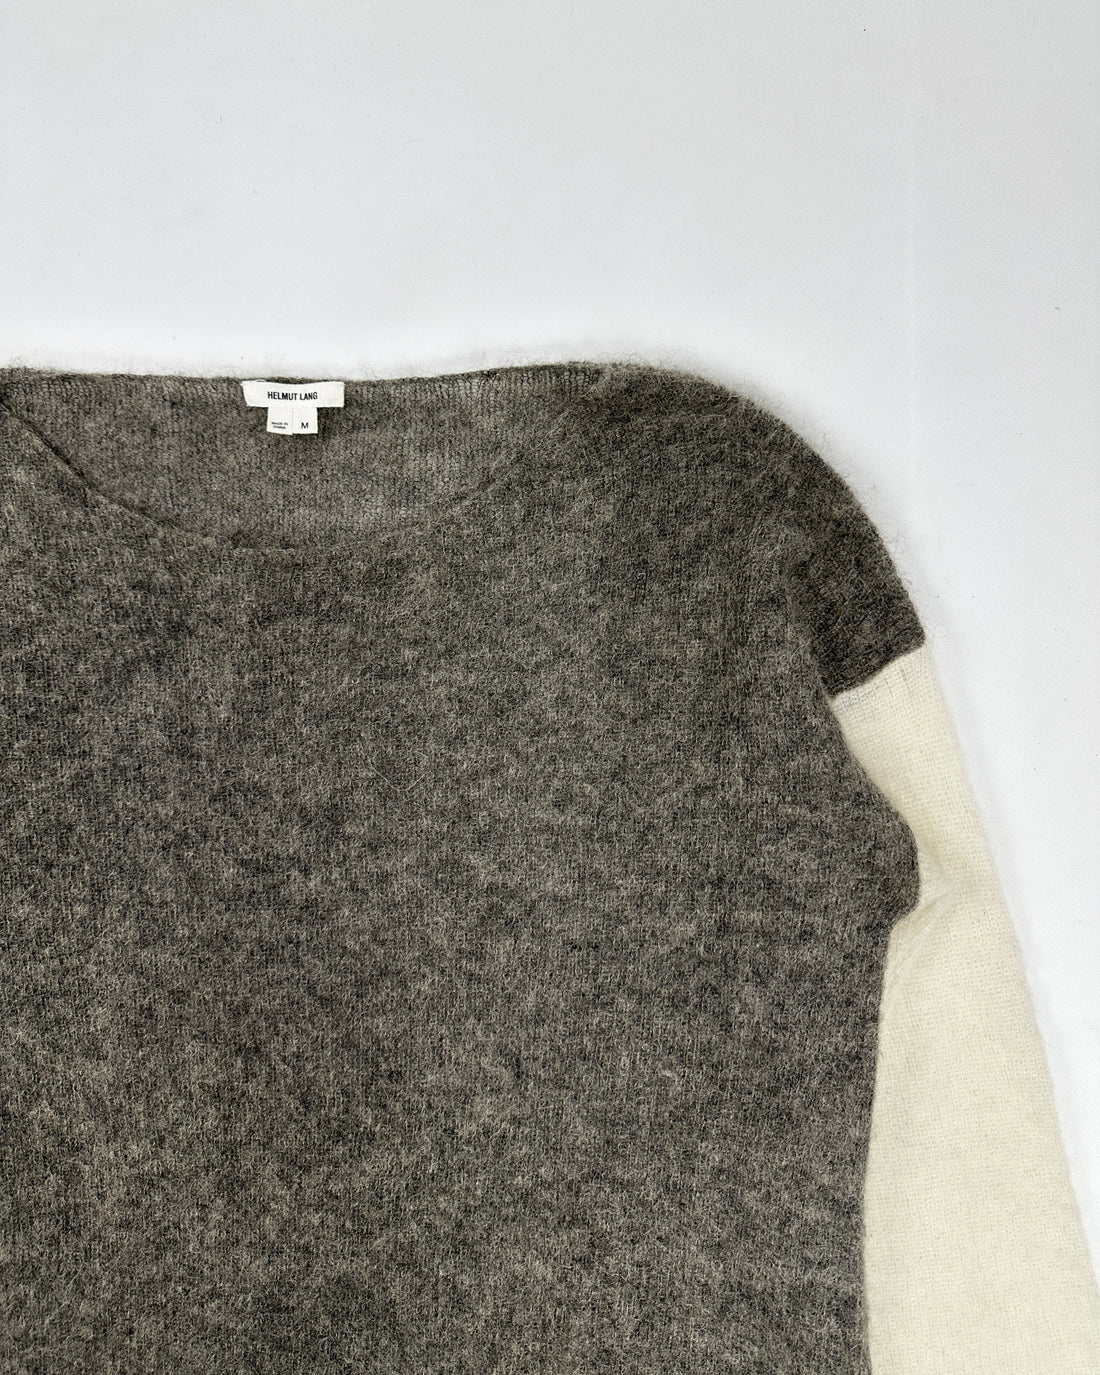 Helmut Lang Mohair Colorblock Alpaca Blend Sweater 2000's